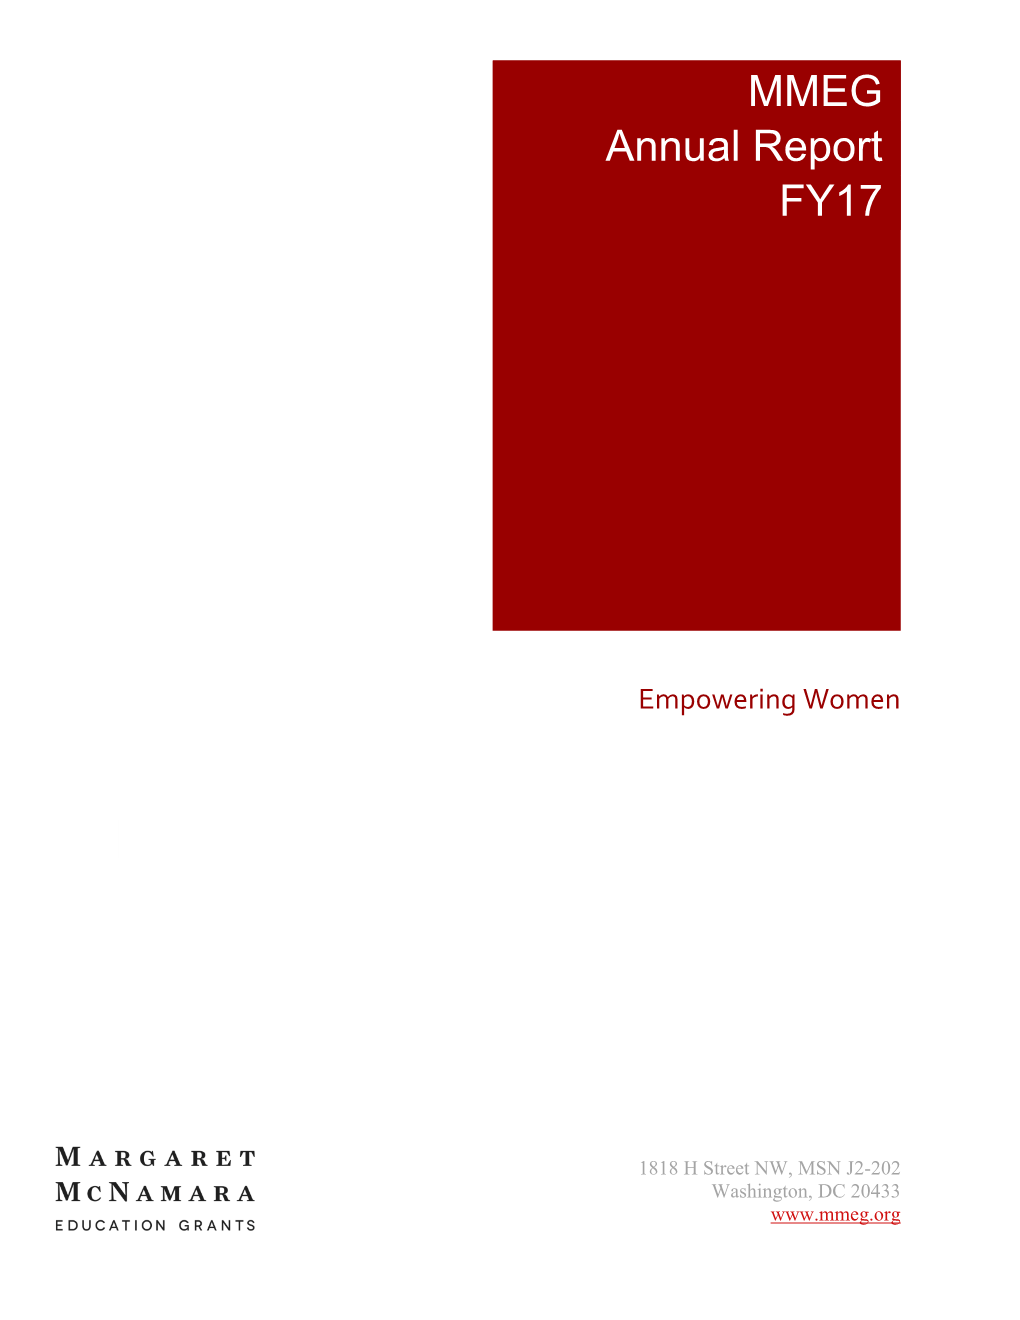 MMEG Annual Report FY17